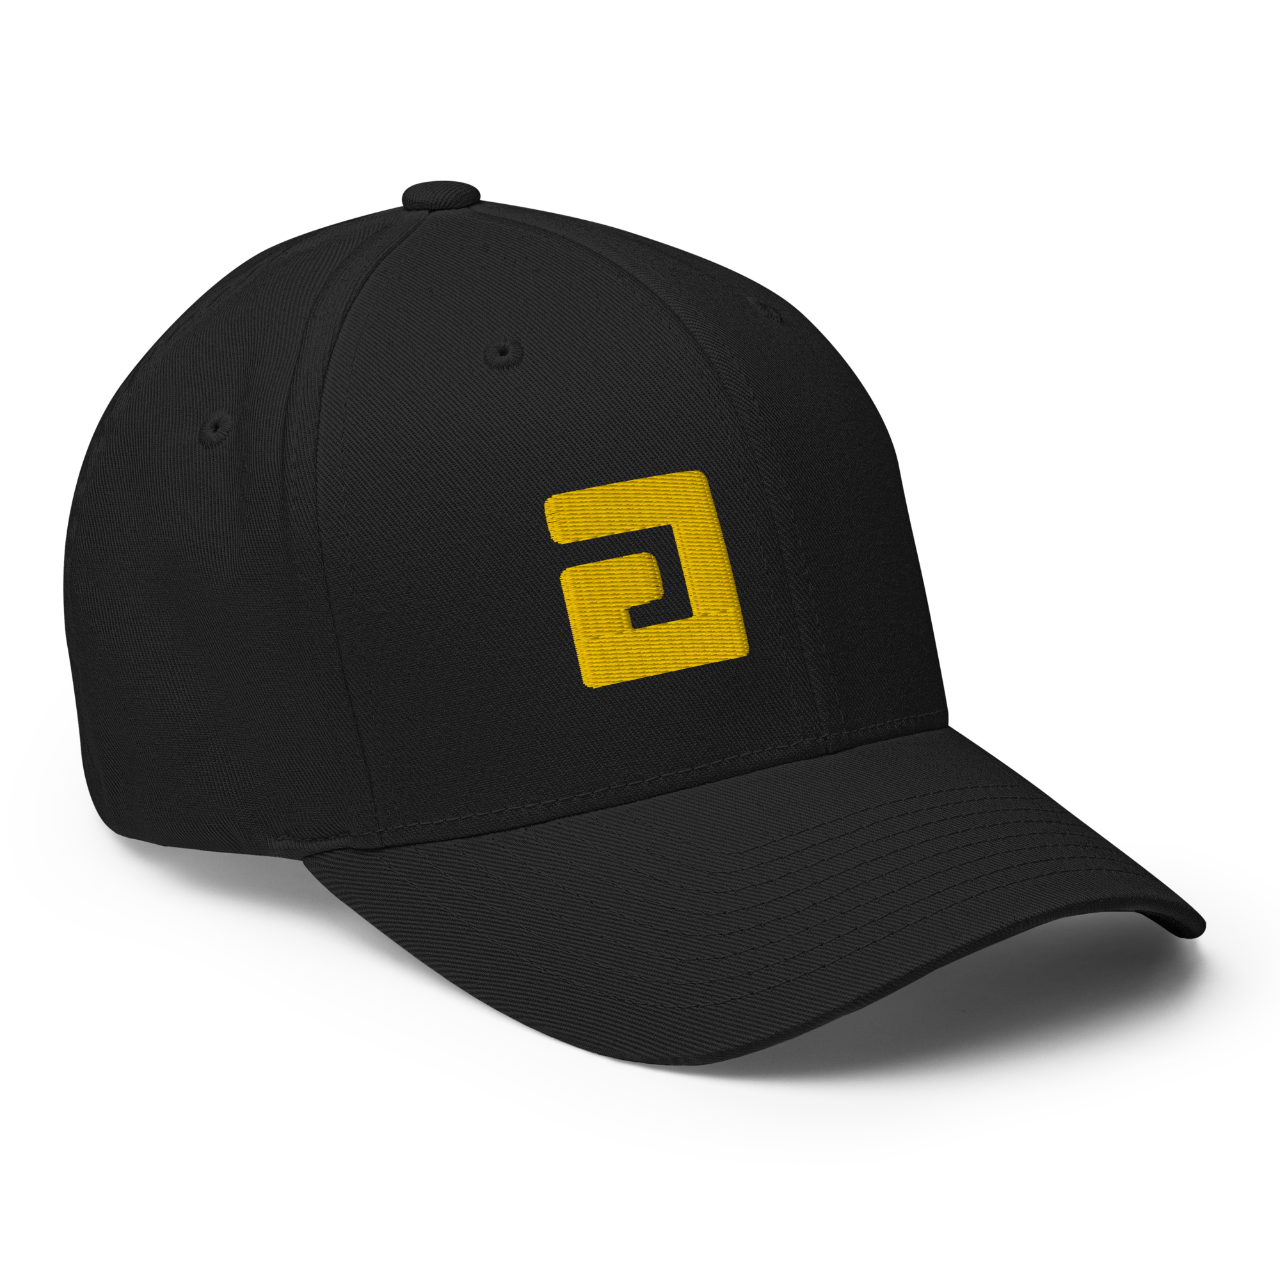 axsgtr axess electronics guitar music industry branded merchandise swag flexfit closed back baseball cap hat black yellow